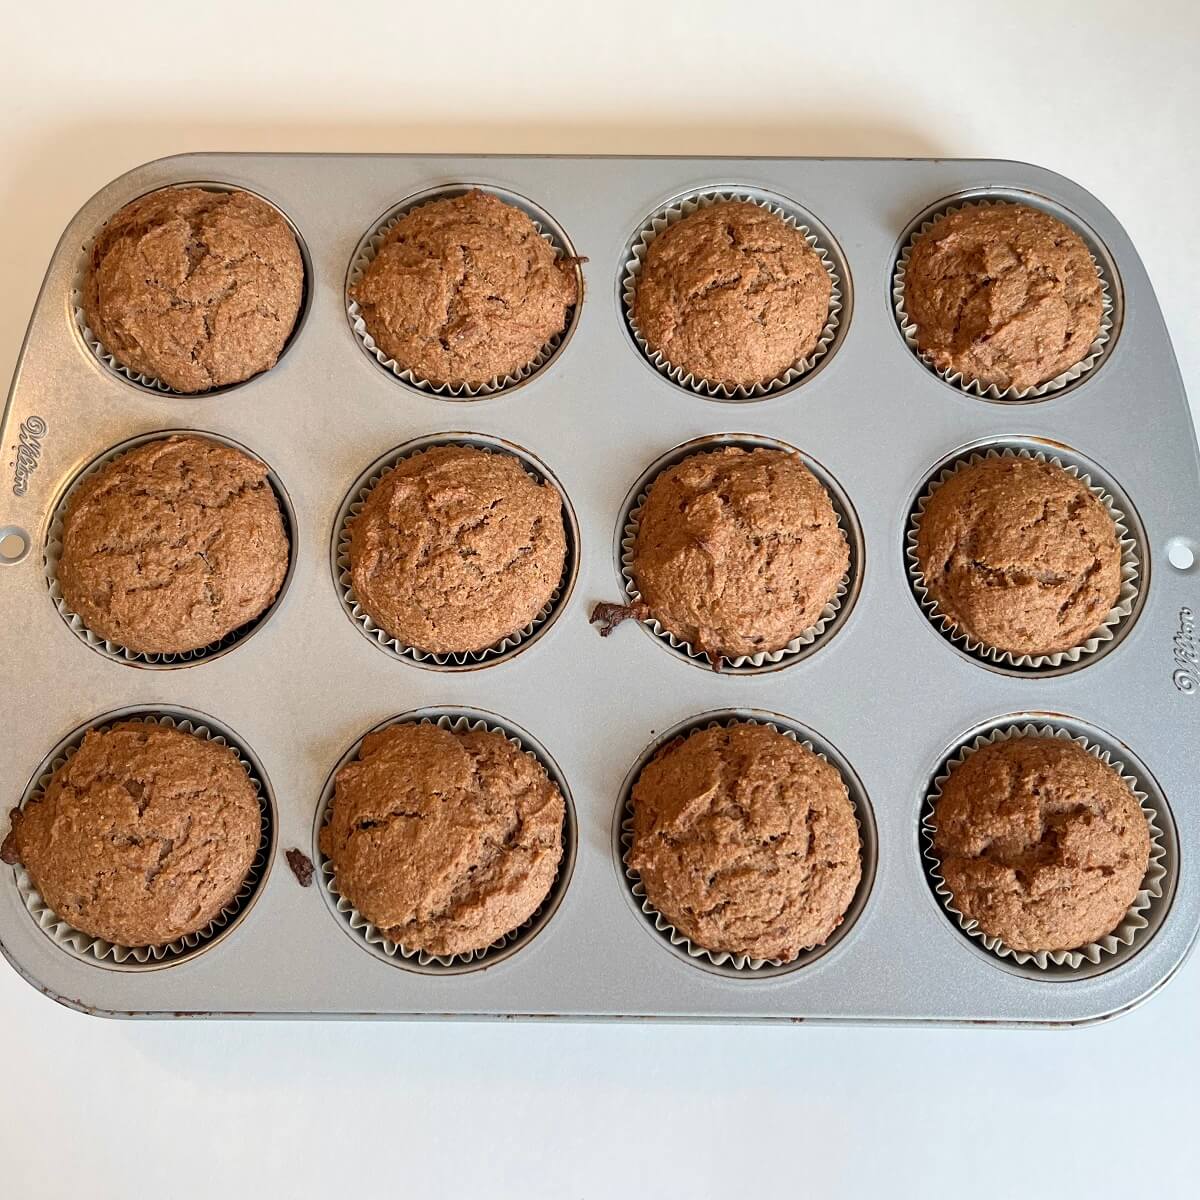 Freshly baked muffins in a metal pan.